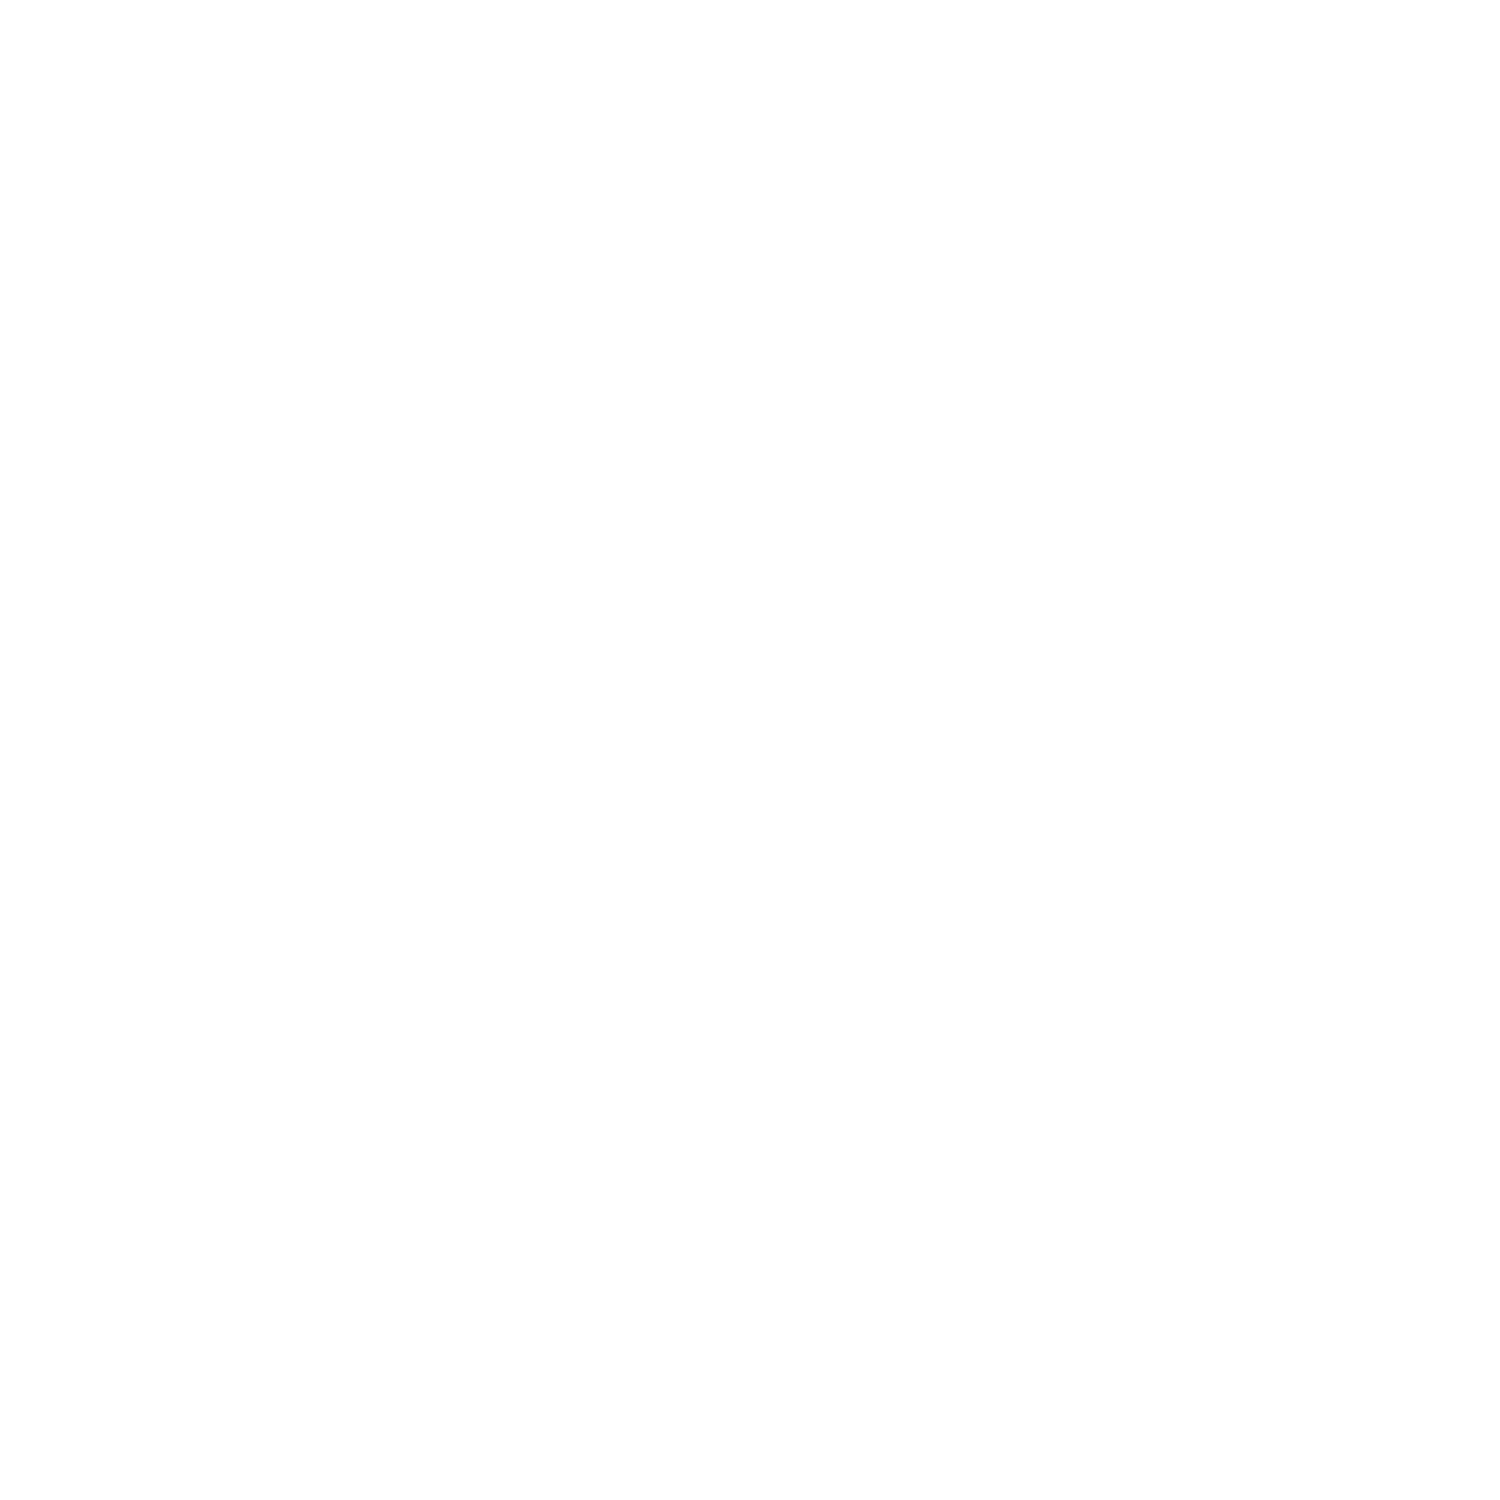 District Title